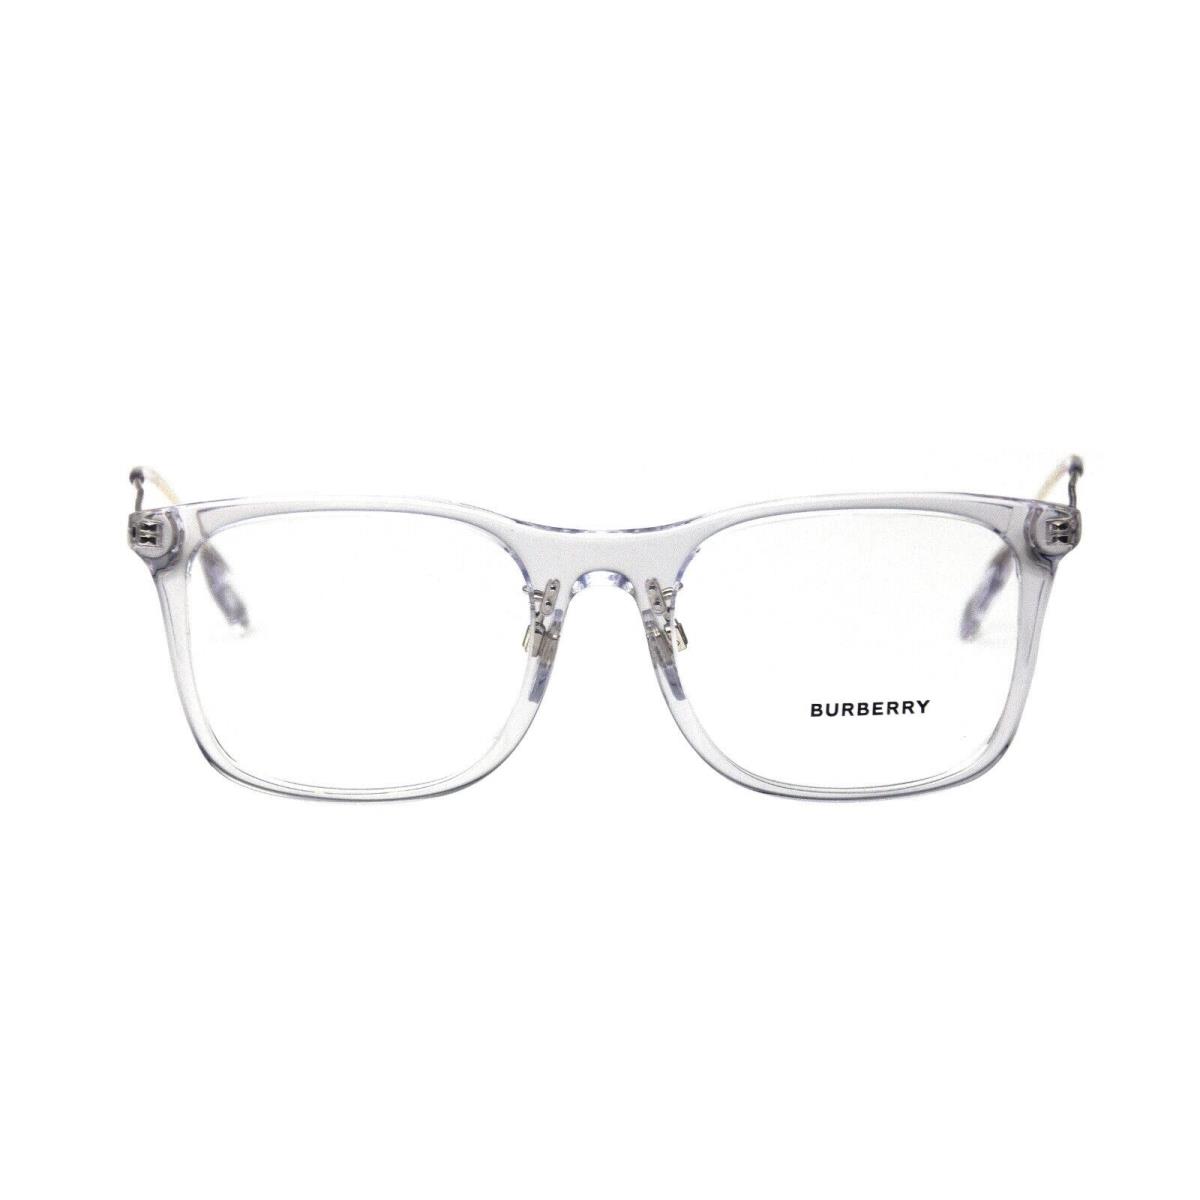 Burberry eyeglasses  - Clear Frame 0